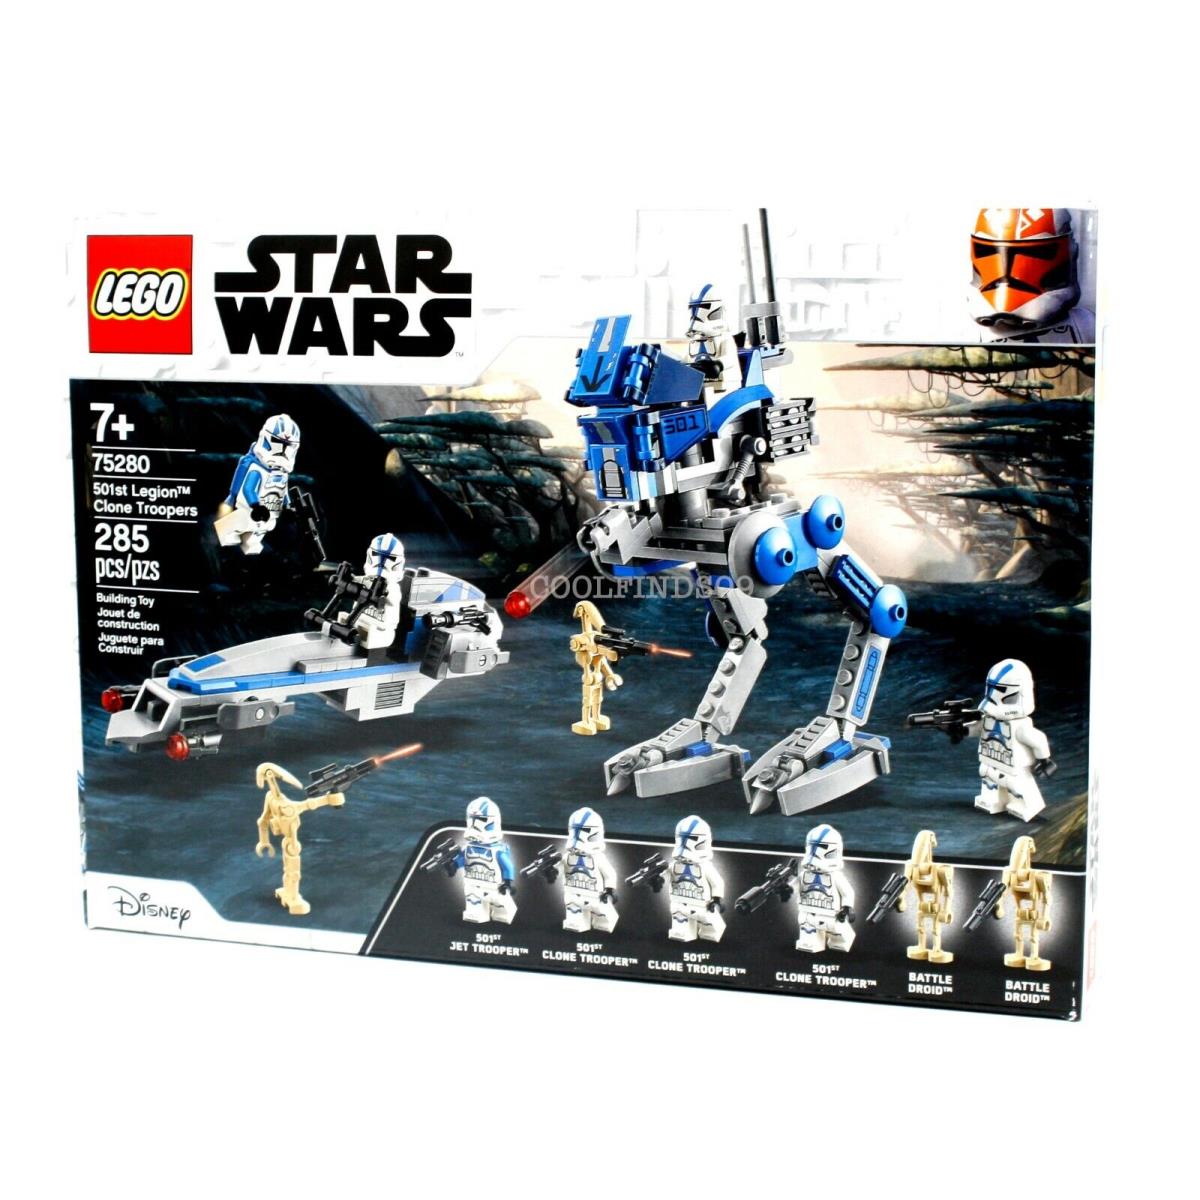 Lego Star Wars 75280 501st Legion Troopers At-rt Walker Barc Speeder Droid